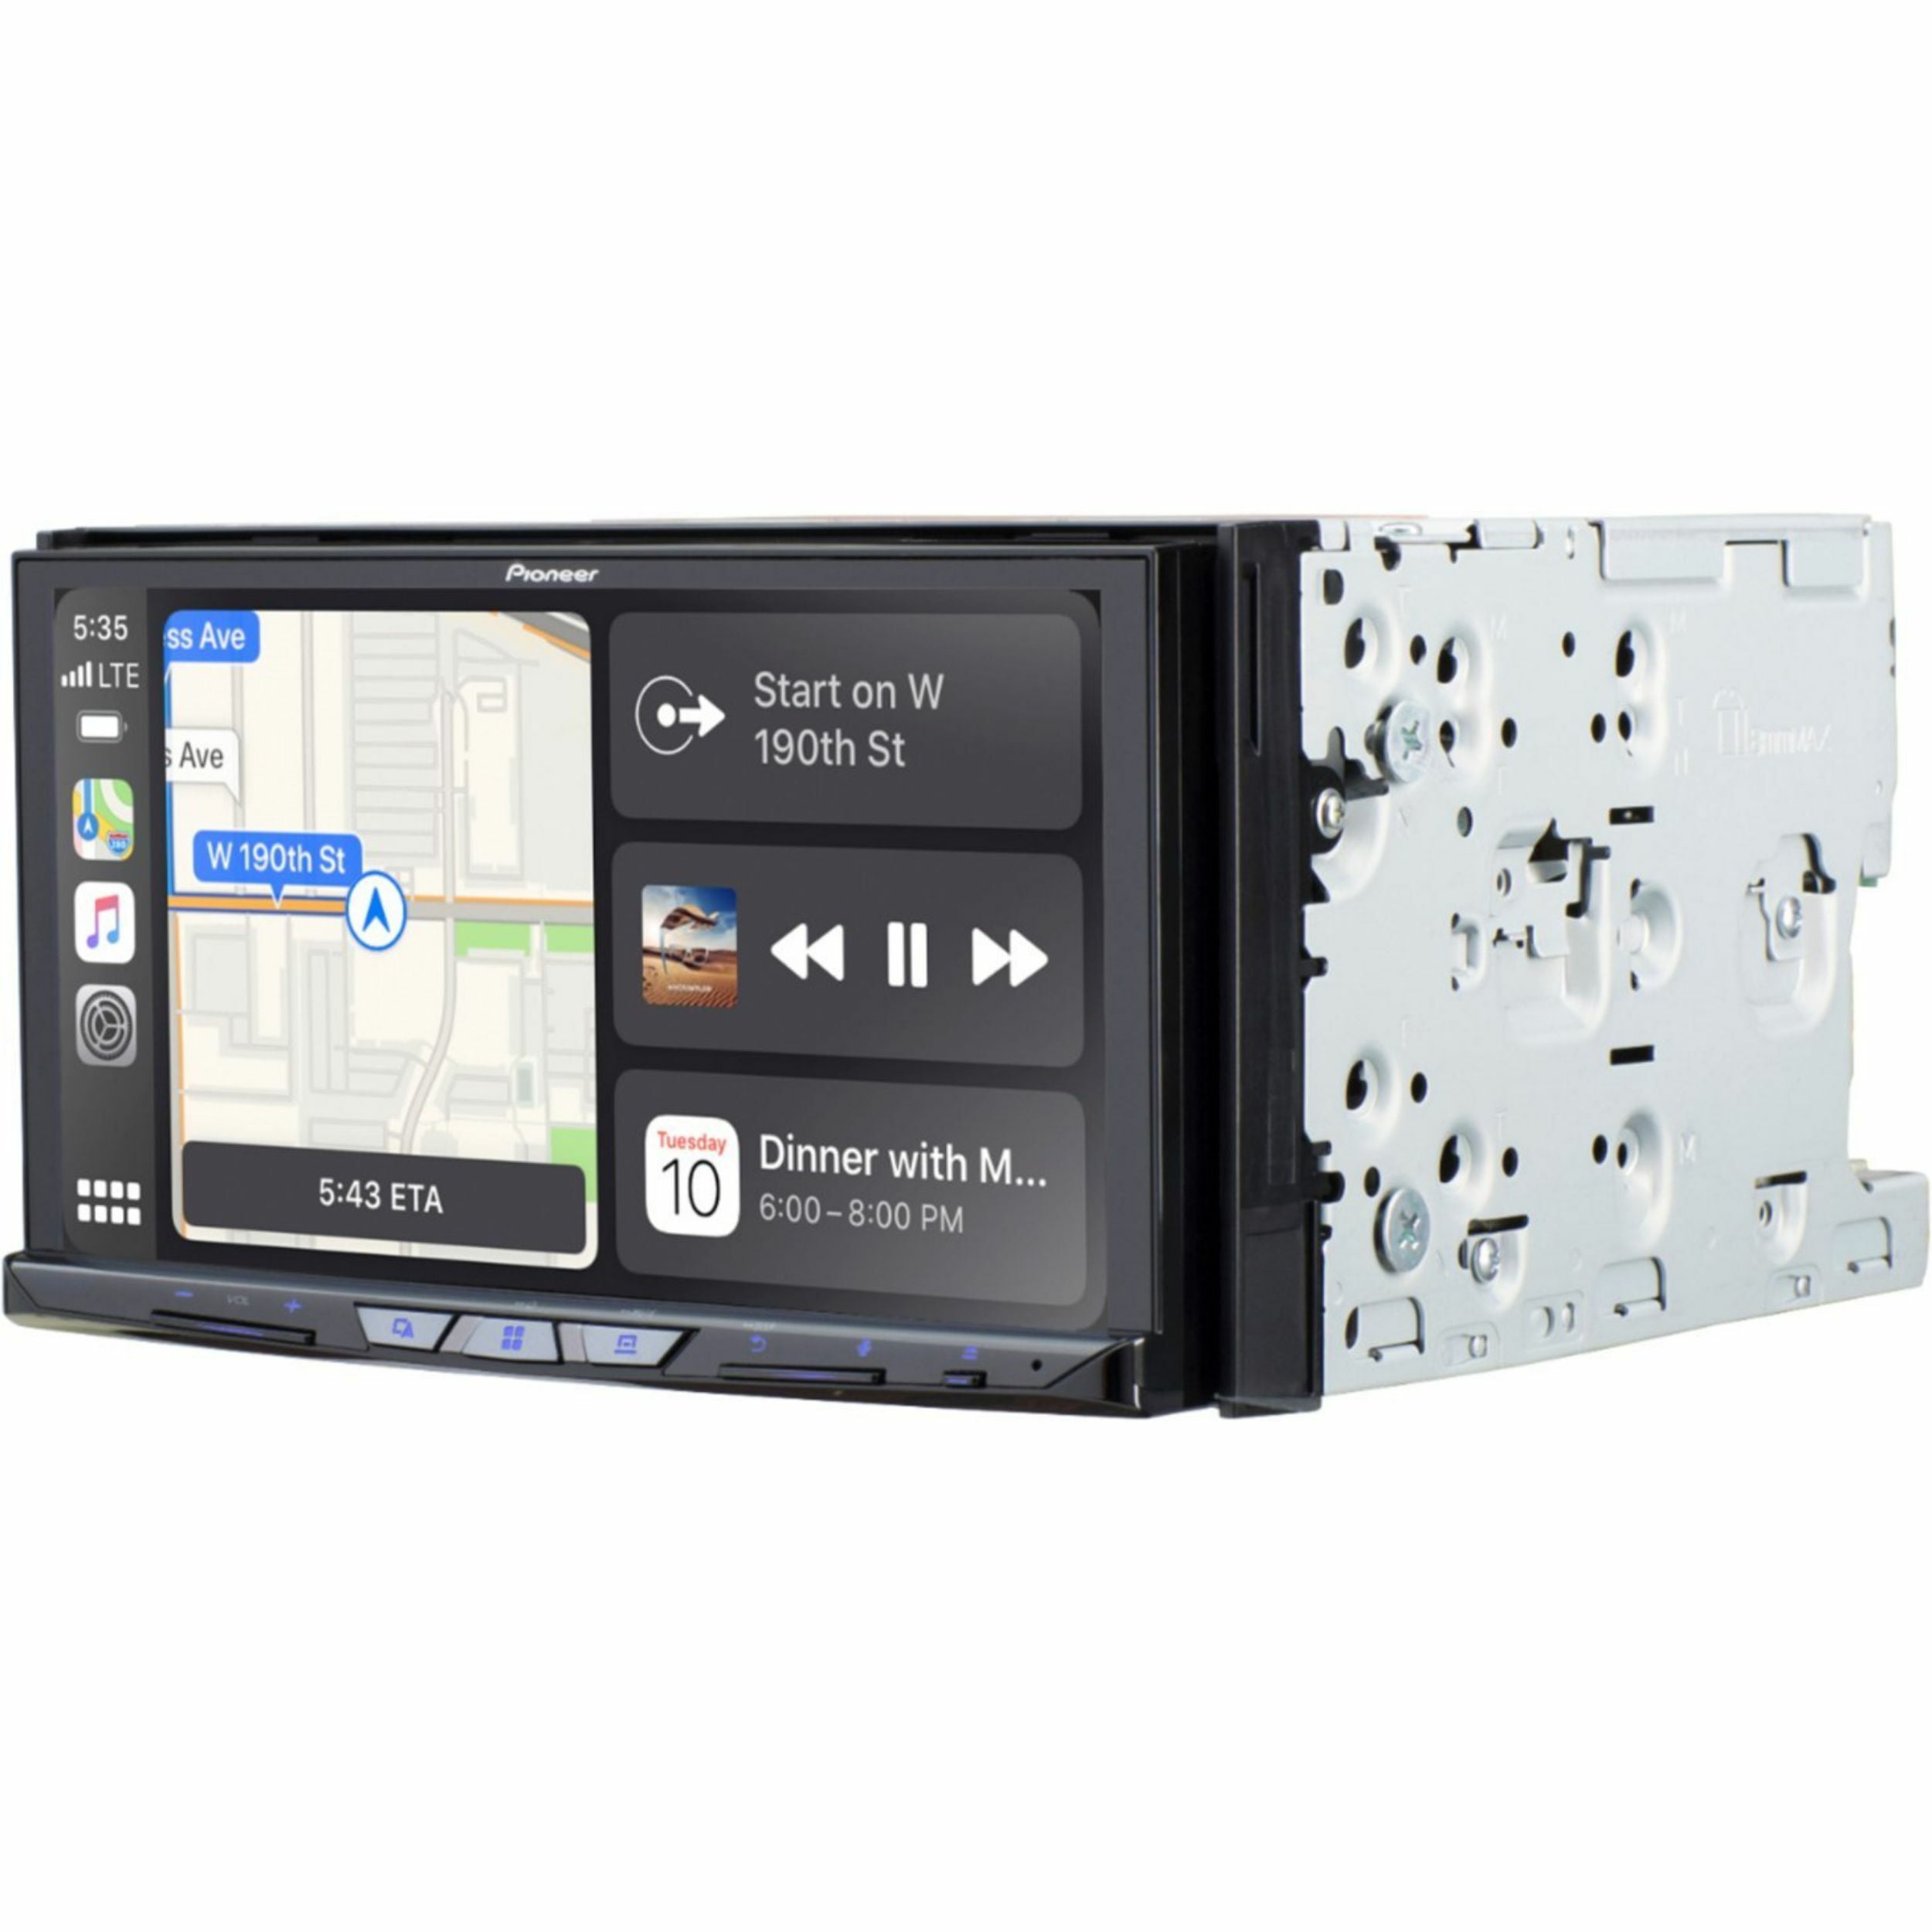 AVIC-7200NEX - In-Dash Navigation AV Receiver with 7” WVGA